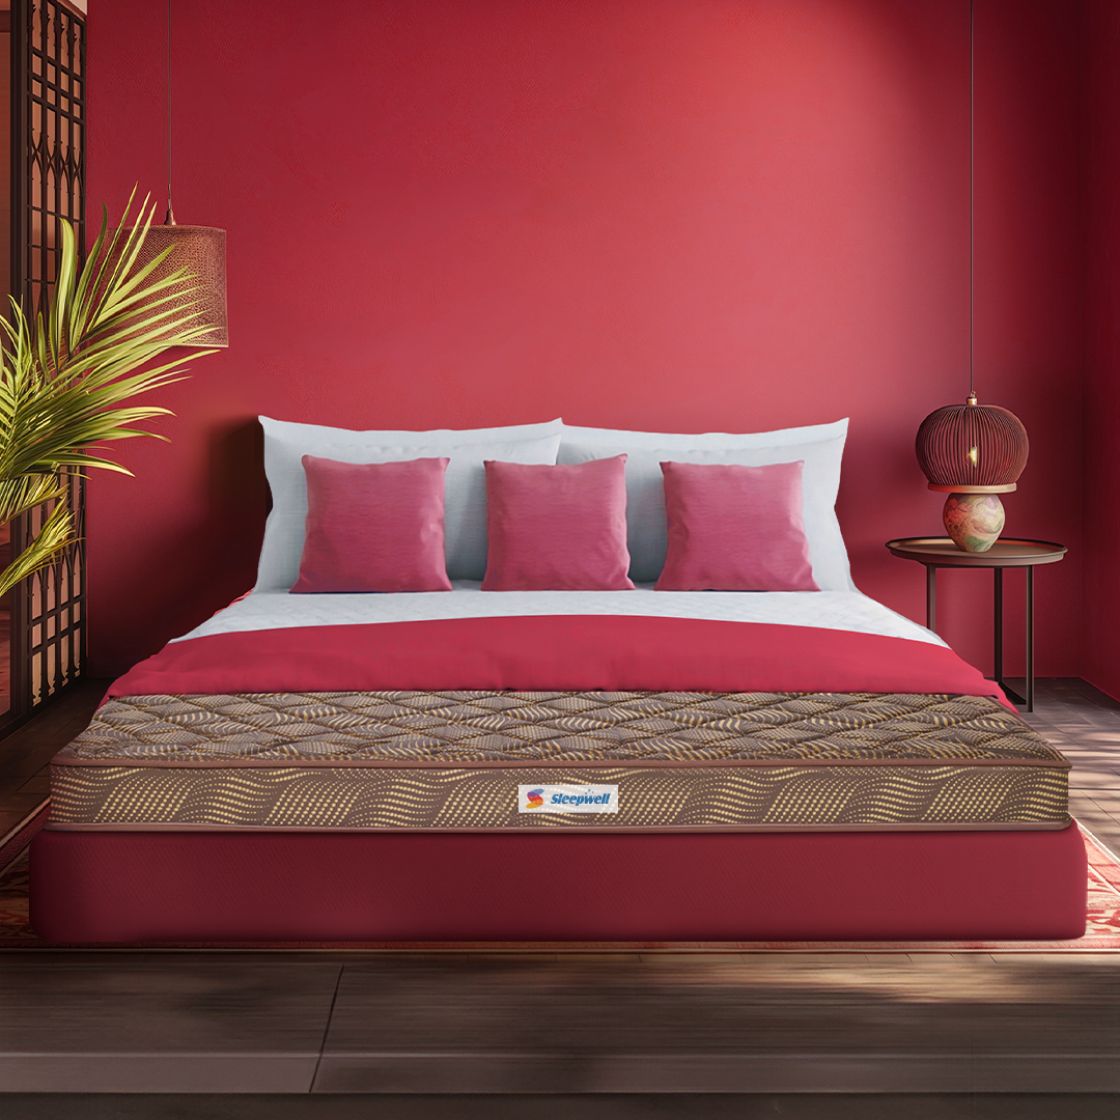 Sleepwell  Champ-Superior PU Foam | 4-inch Double Bed Size | Medium Firm | Anti Sag Tech Mattress (Brown, 84x60x4)